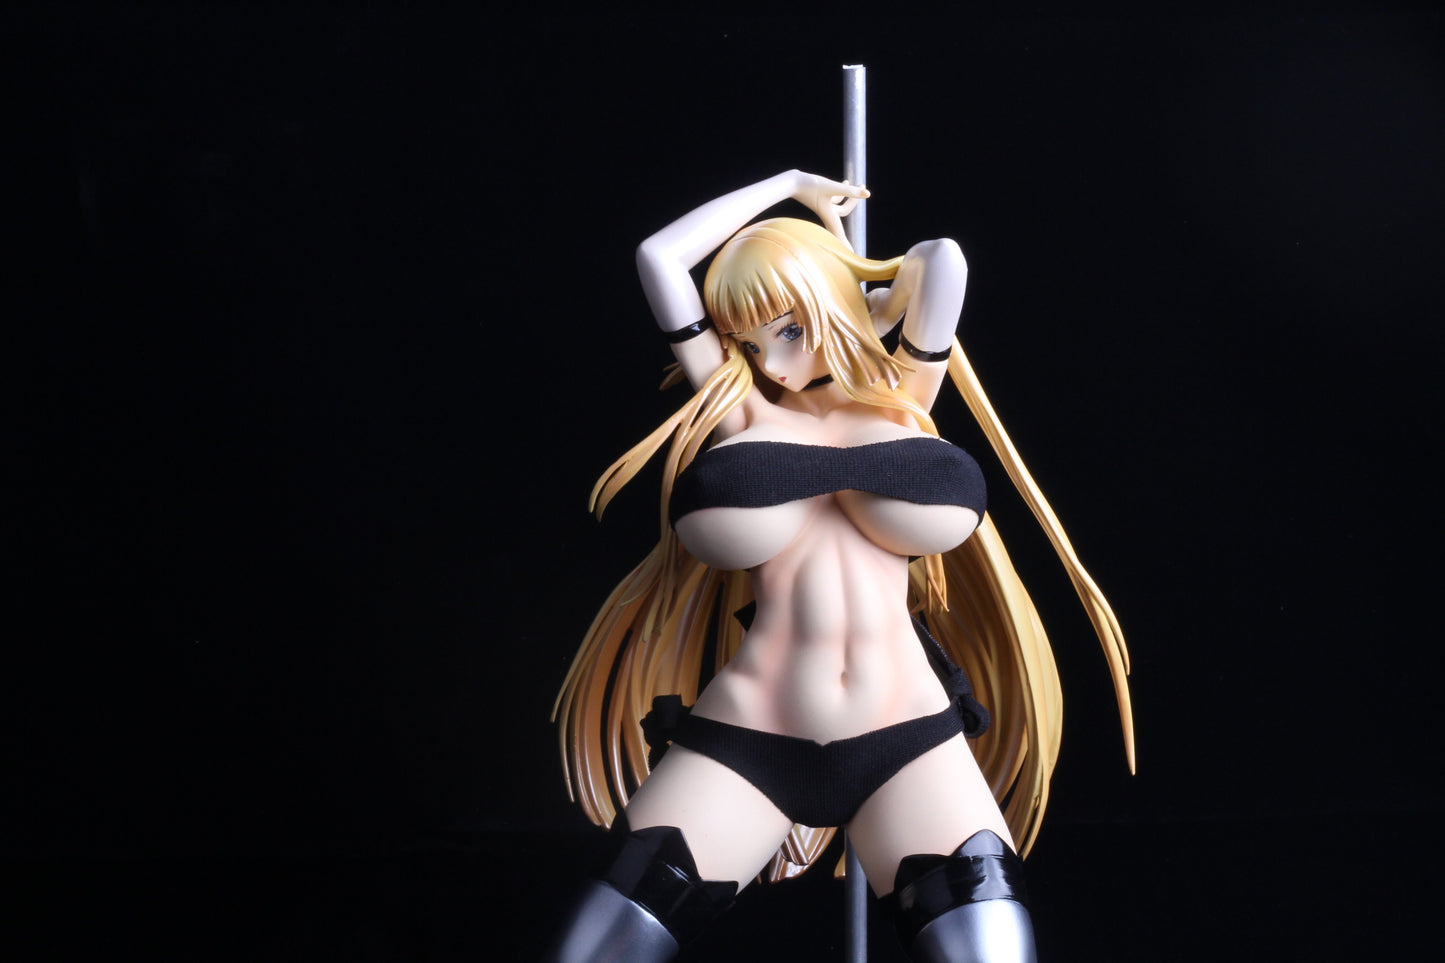 Mous Unit sexy Pole dance Liliana-san of My House huge breast 1/5 anime girl figure naked anime figures